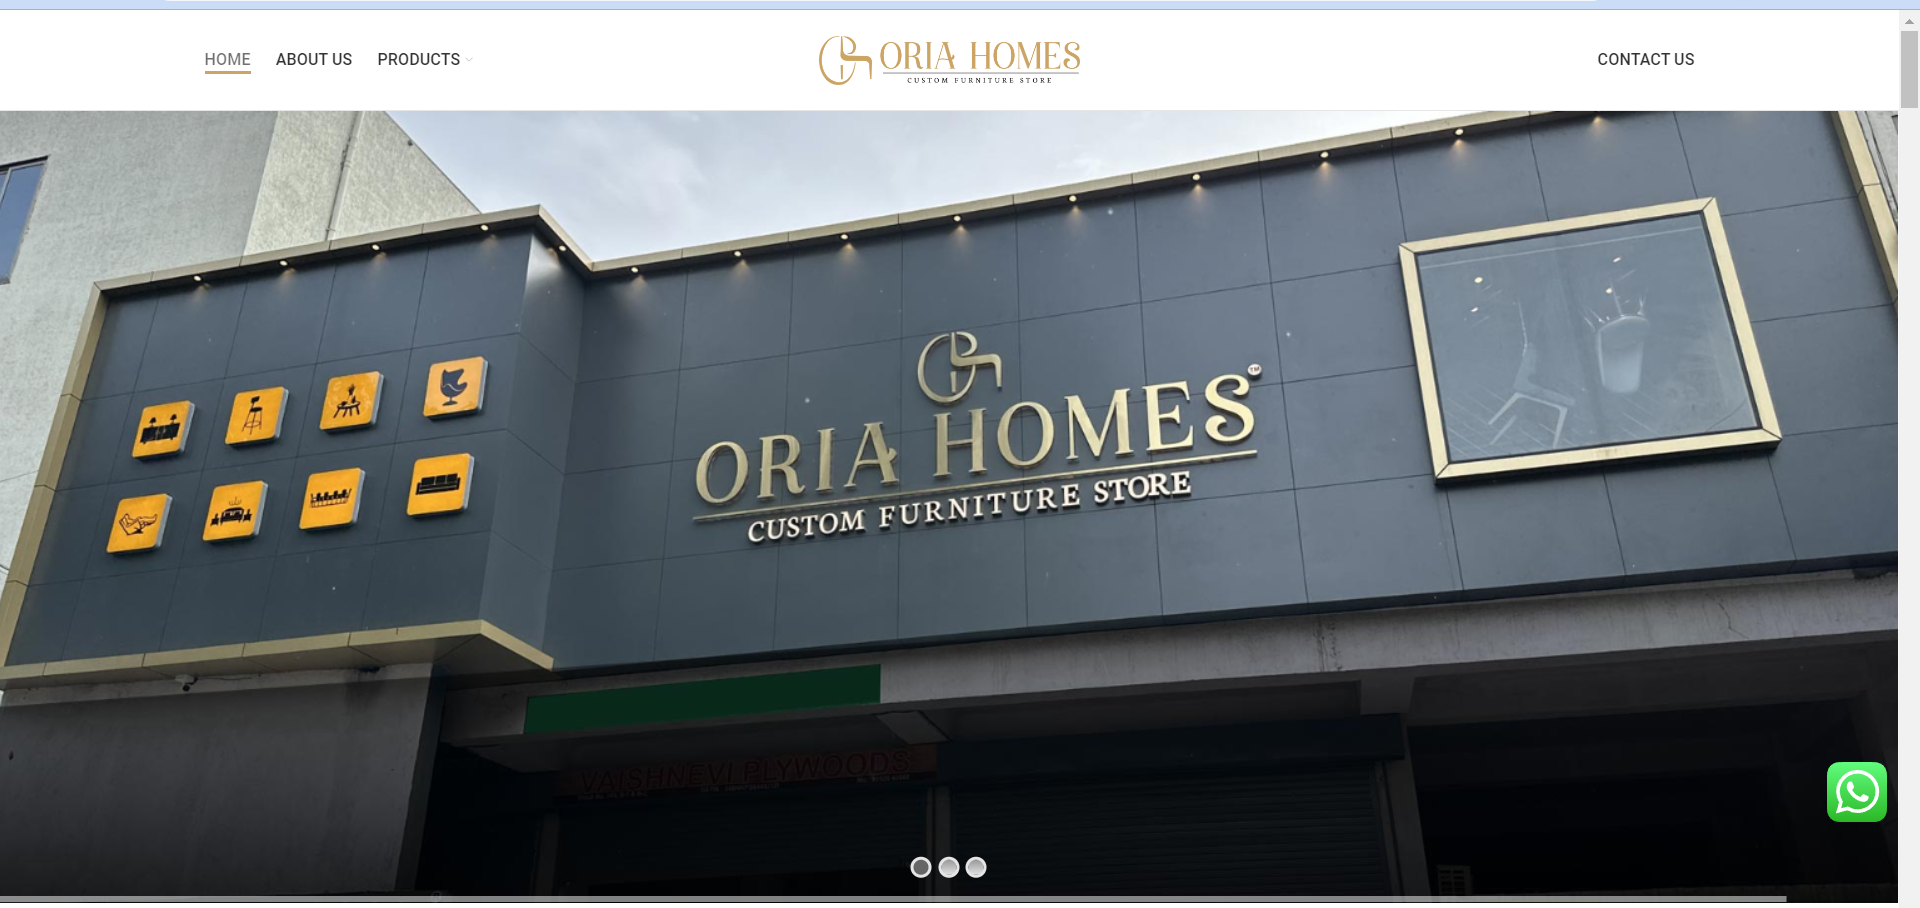 The Oria Homes